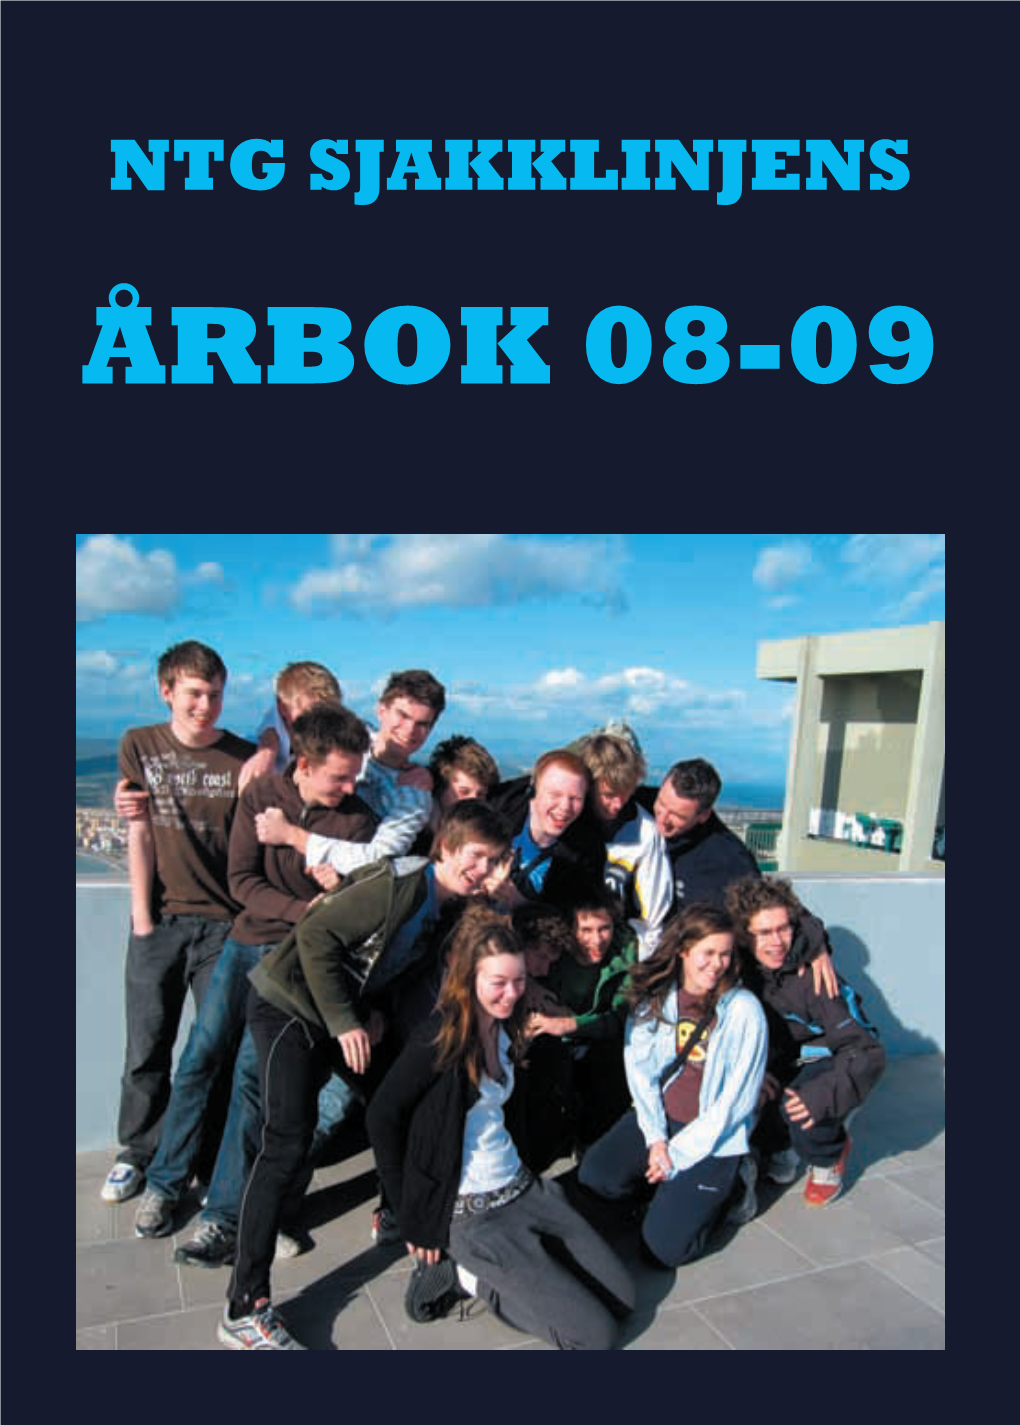 ÅRBOK 08-09 Forord